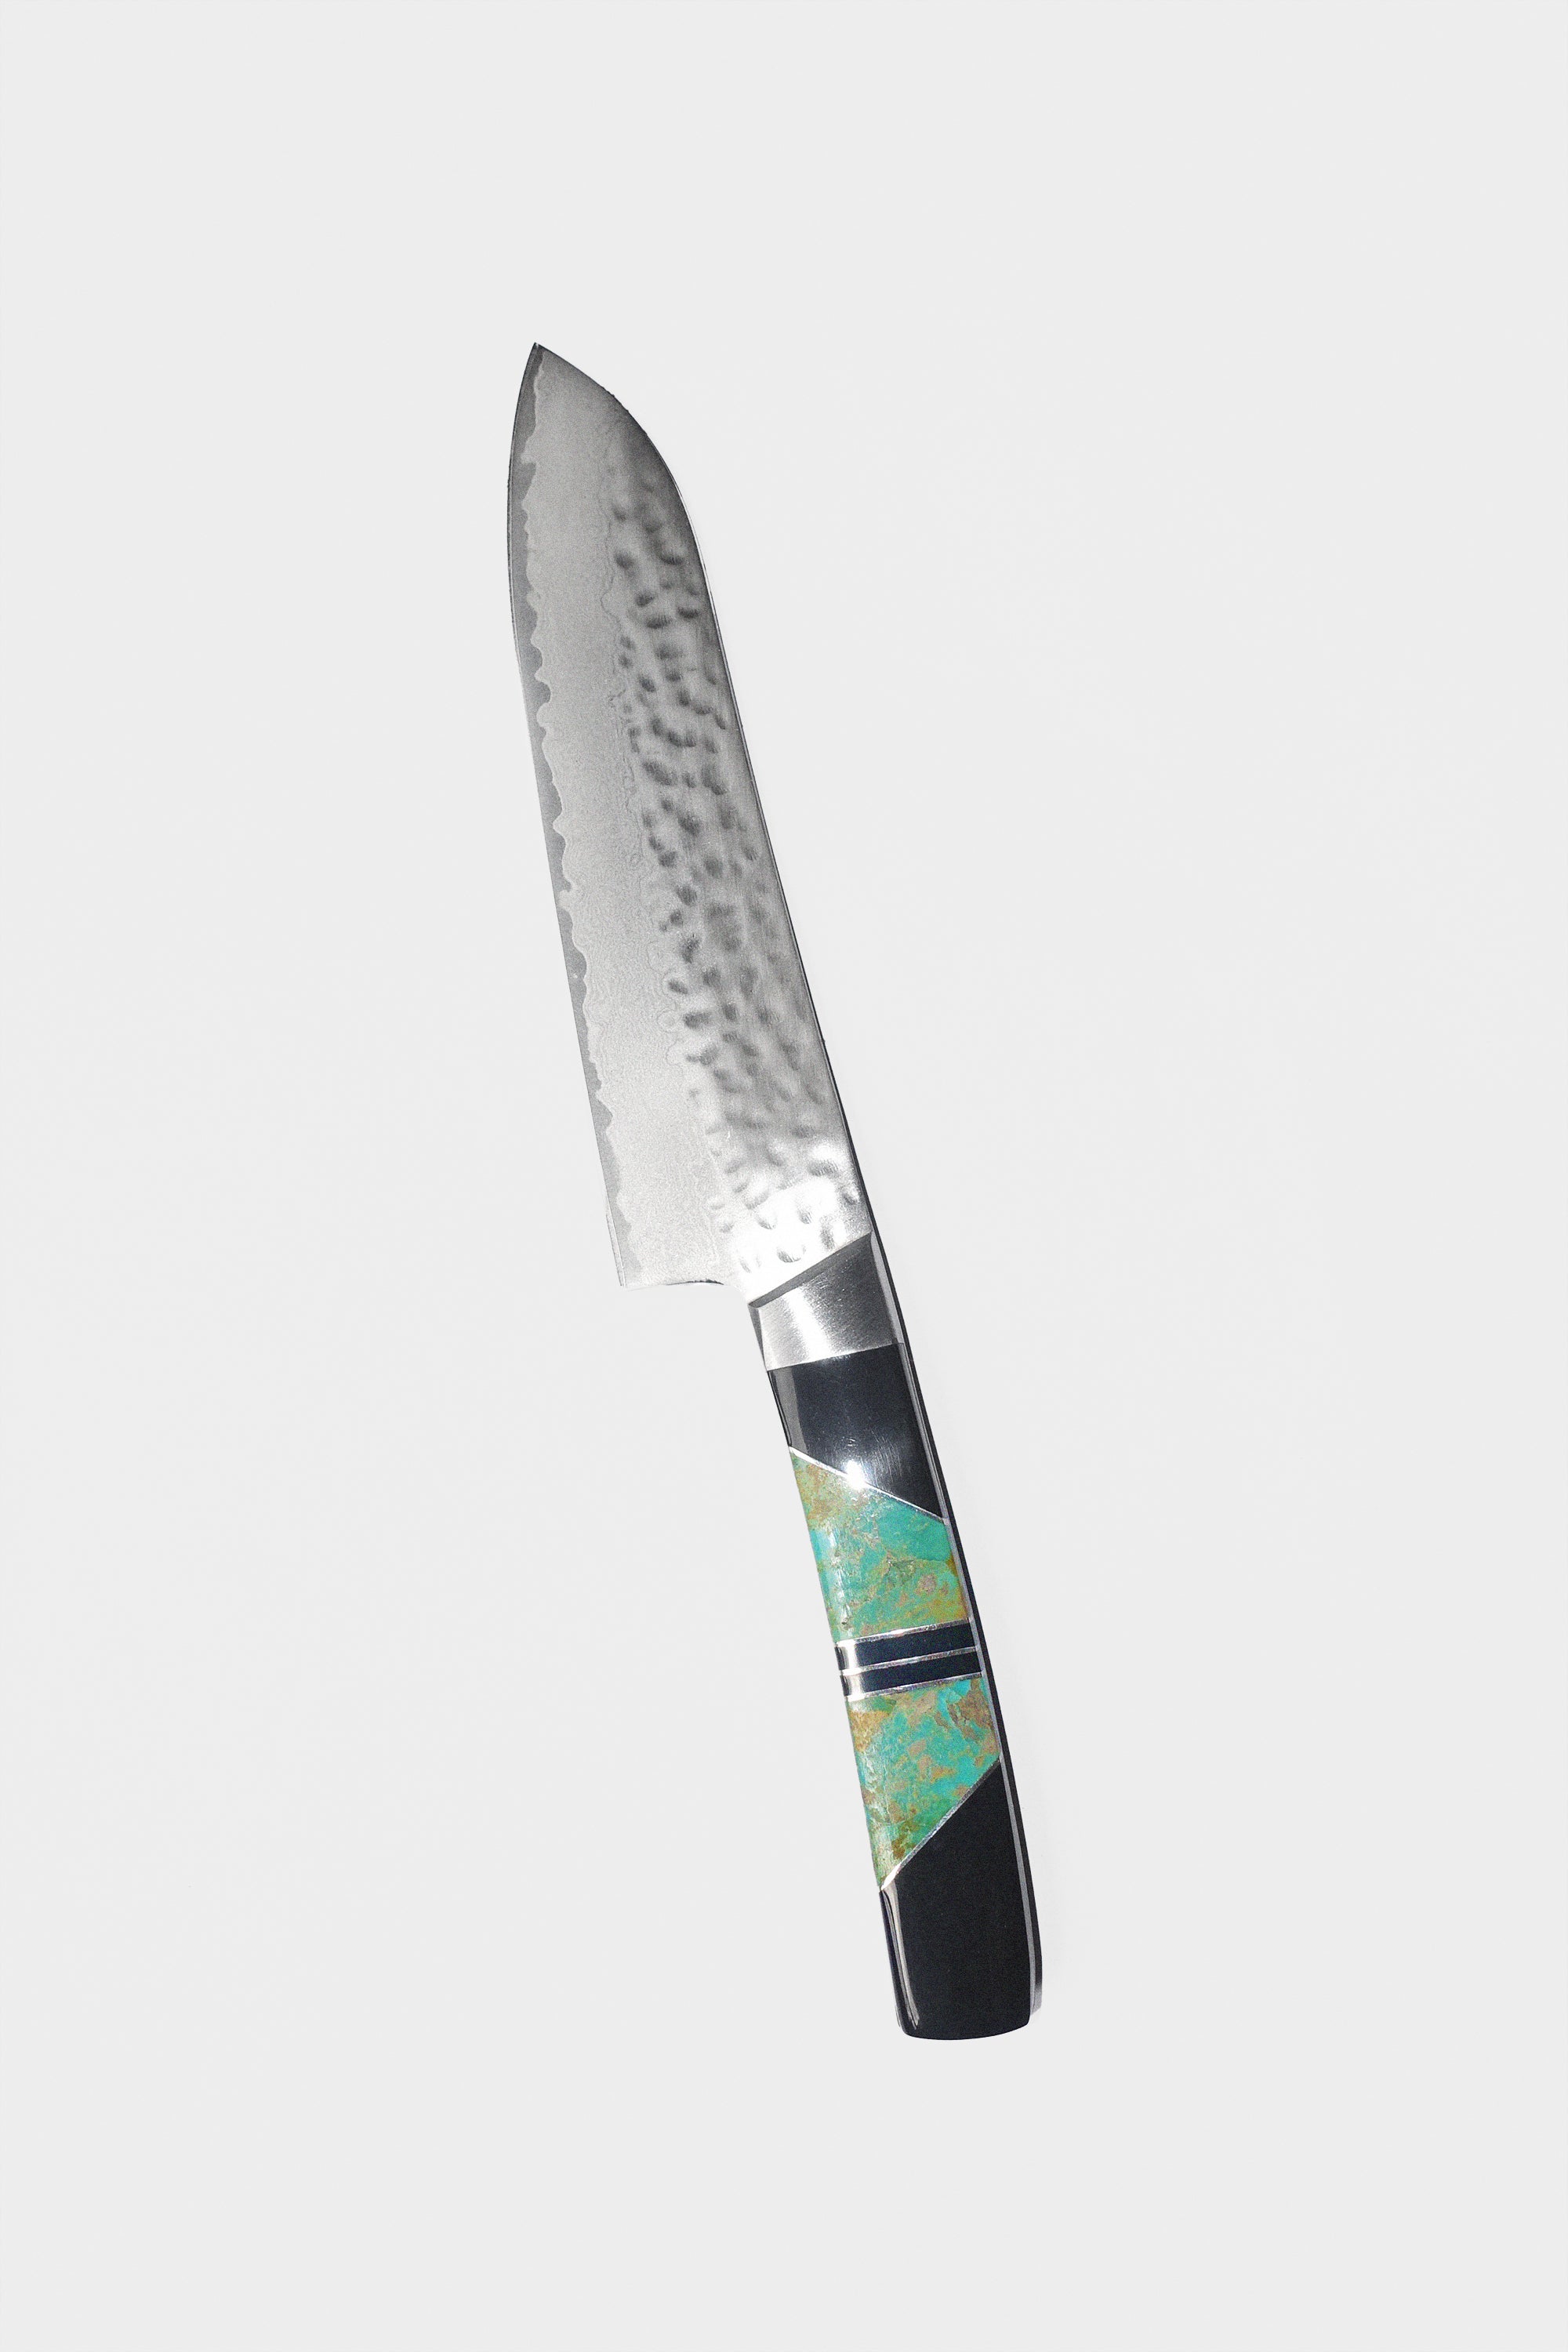 5" Santoku Knife in Turquoise